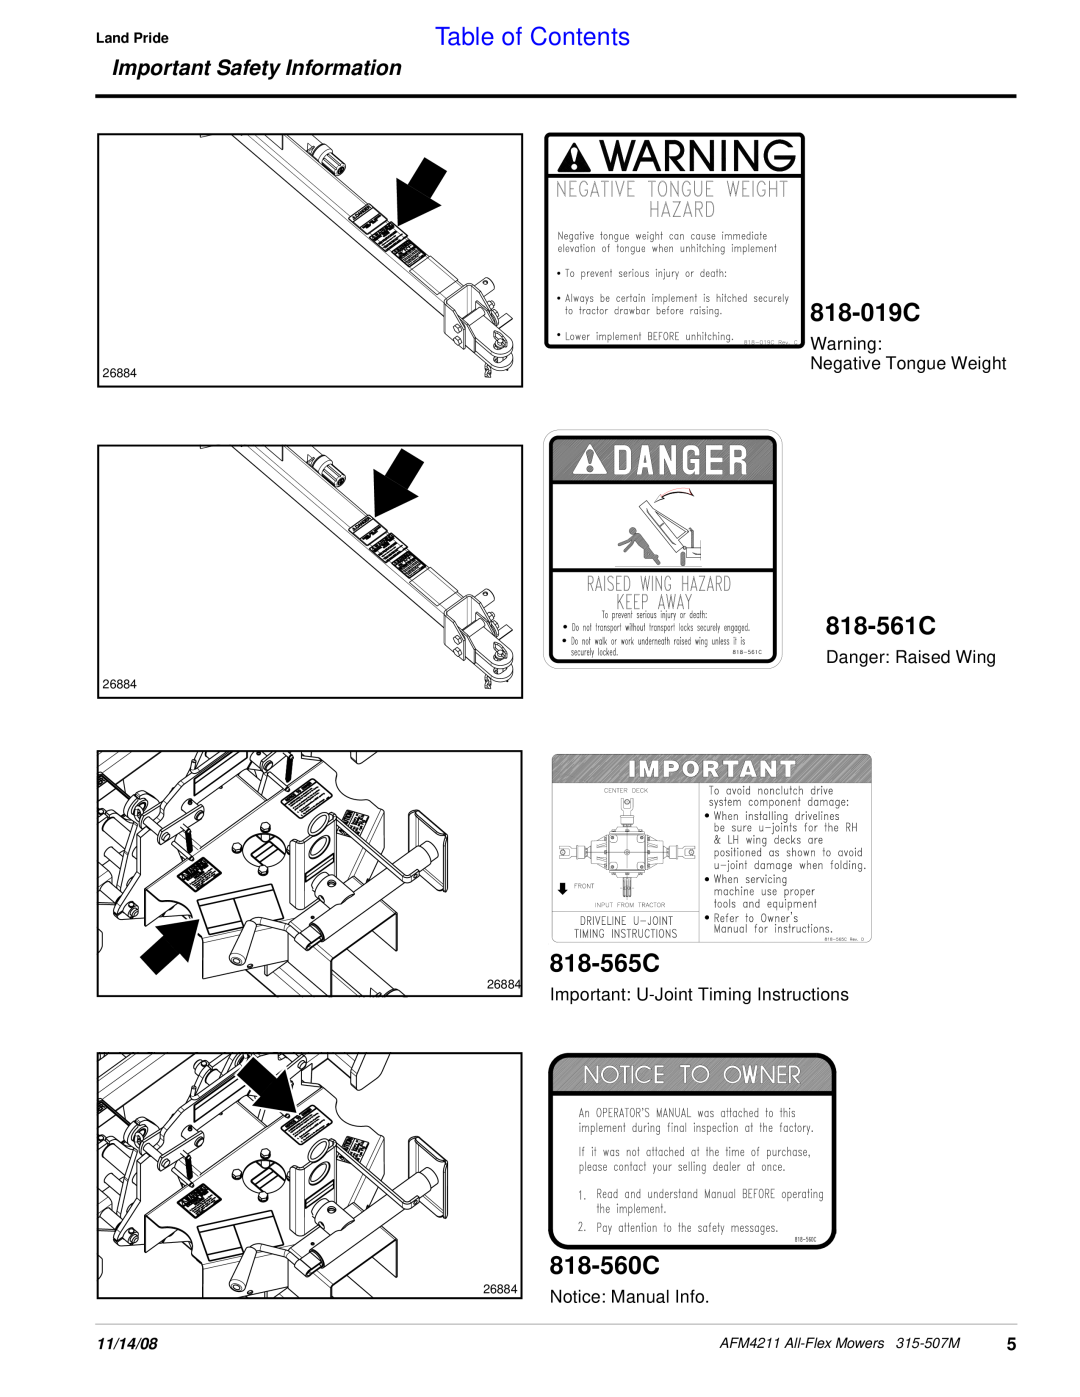 Land Pride AFM4211 manual 818-019C, 818-561C, 818-565C, 818-560C, Important U-Joint Timing Instructions, Notice Manual Info 